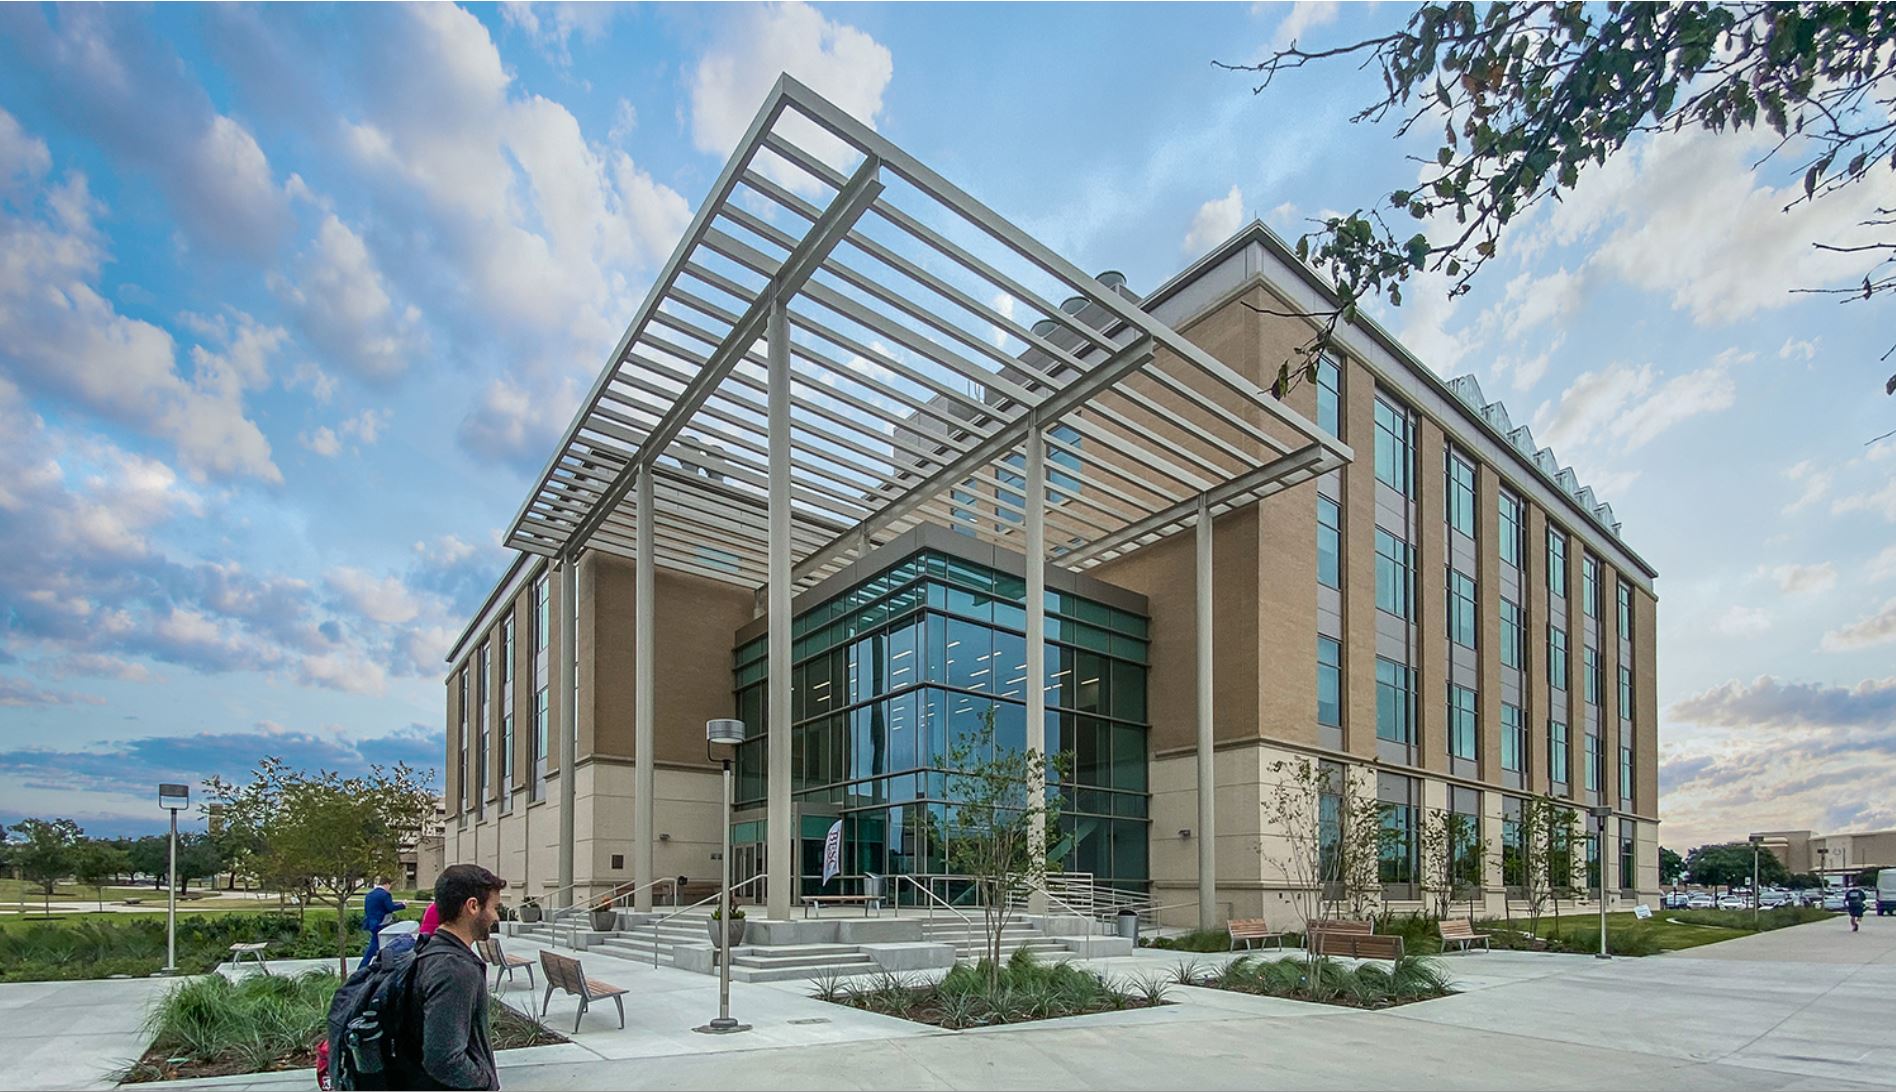 Texas A&M University’s Agriculture Building #5 